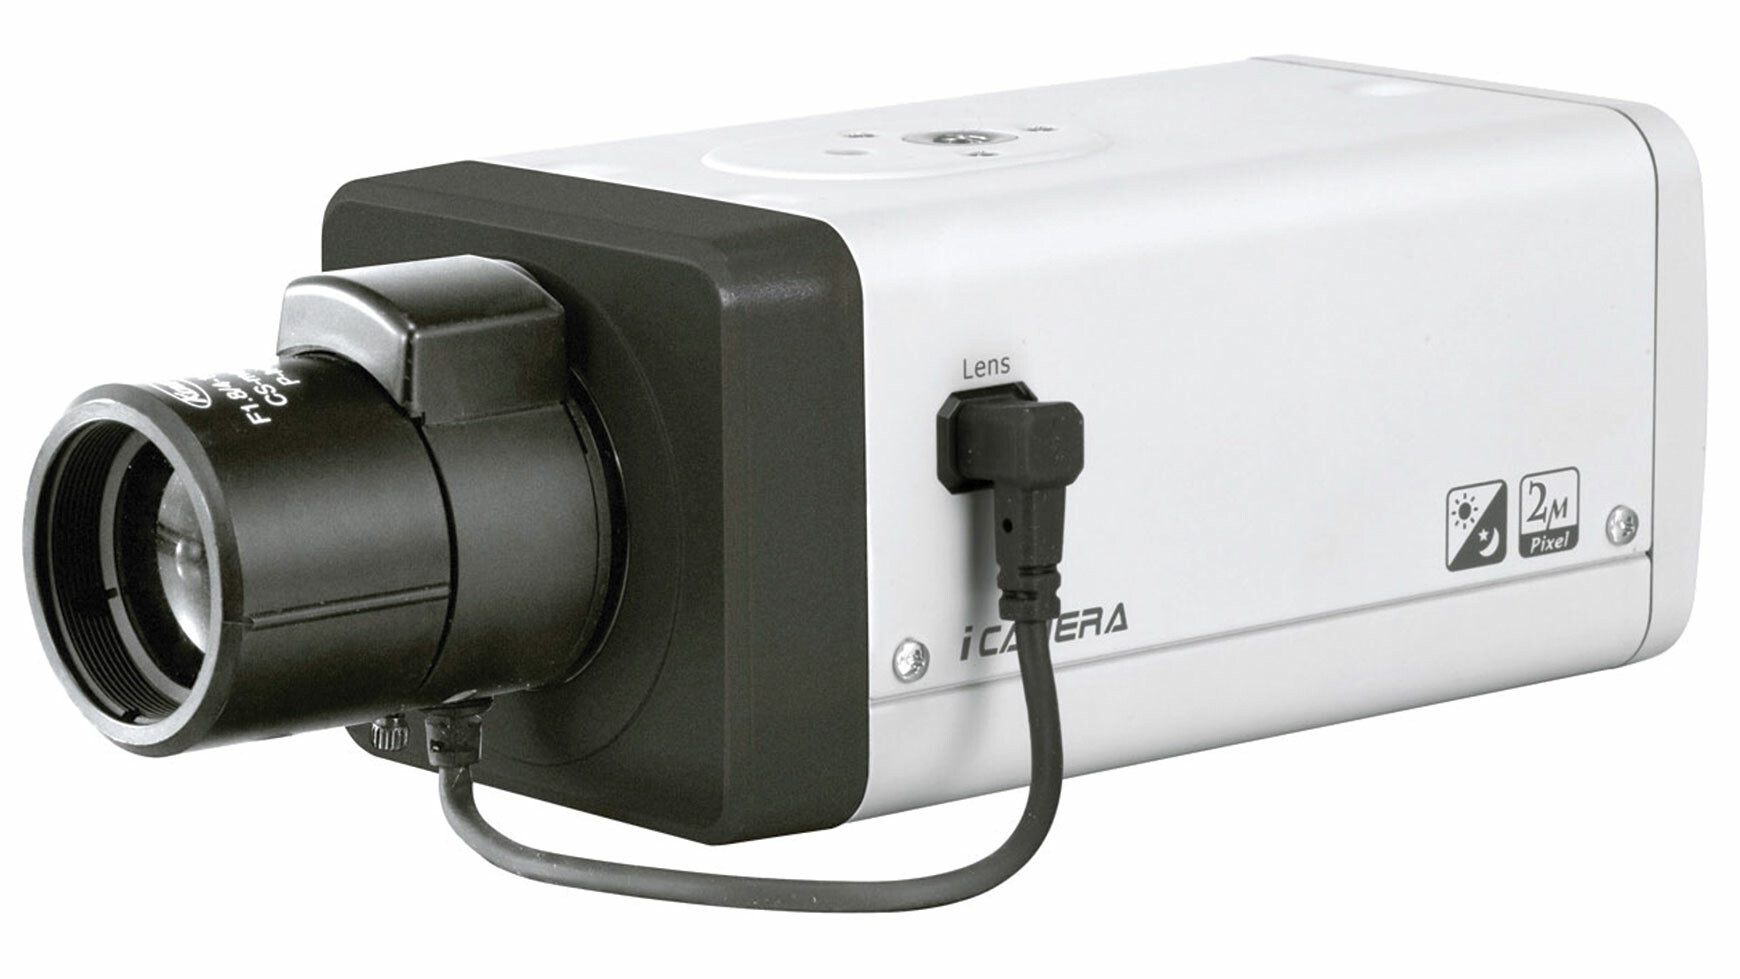 Dahua IPC-HF-5200 box kamera 2Mpix Rasprodaja